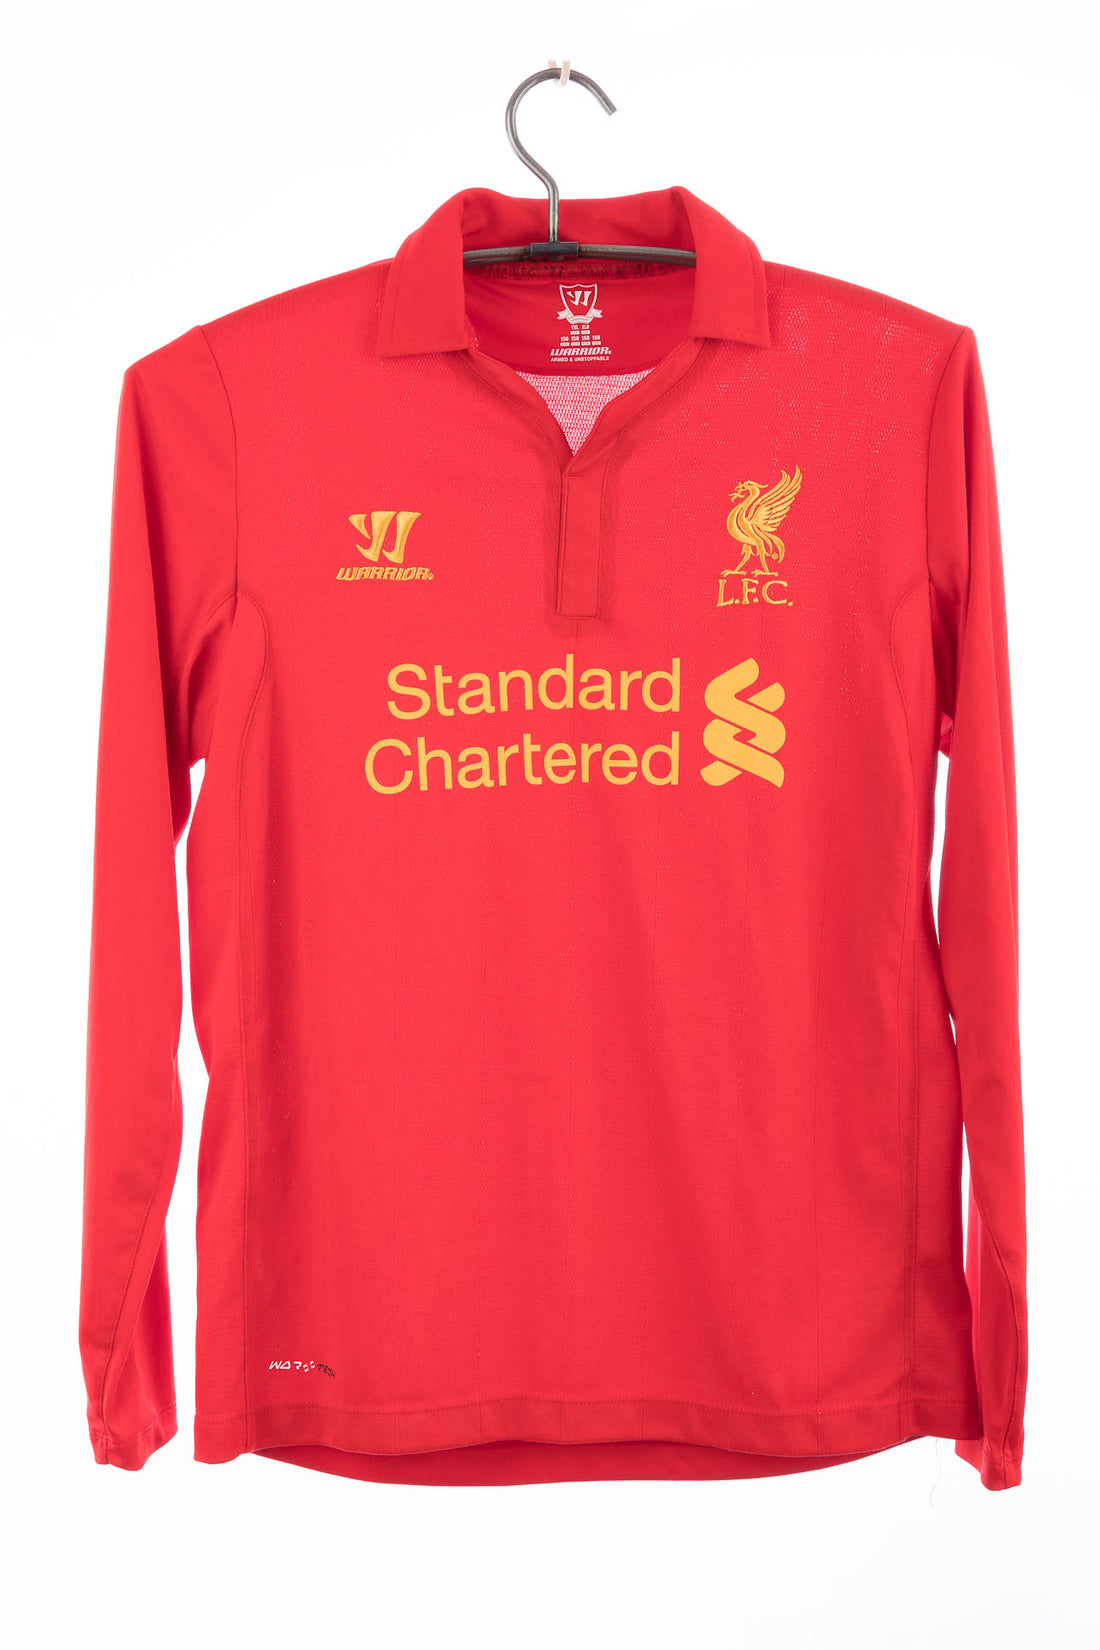 Liverpool 2012 - 2013 L/S Home Football Shirt (Kids)